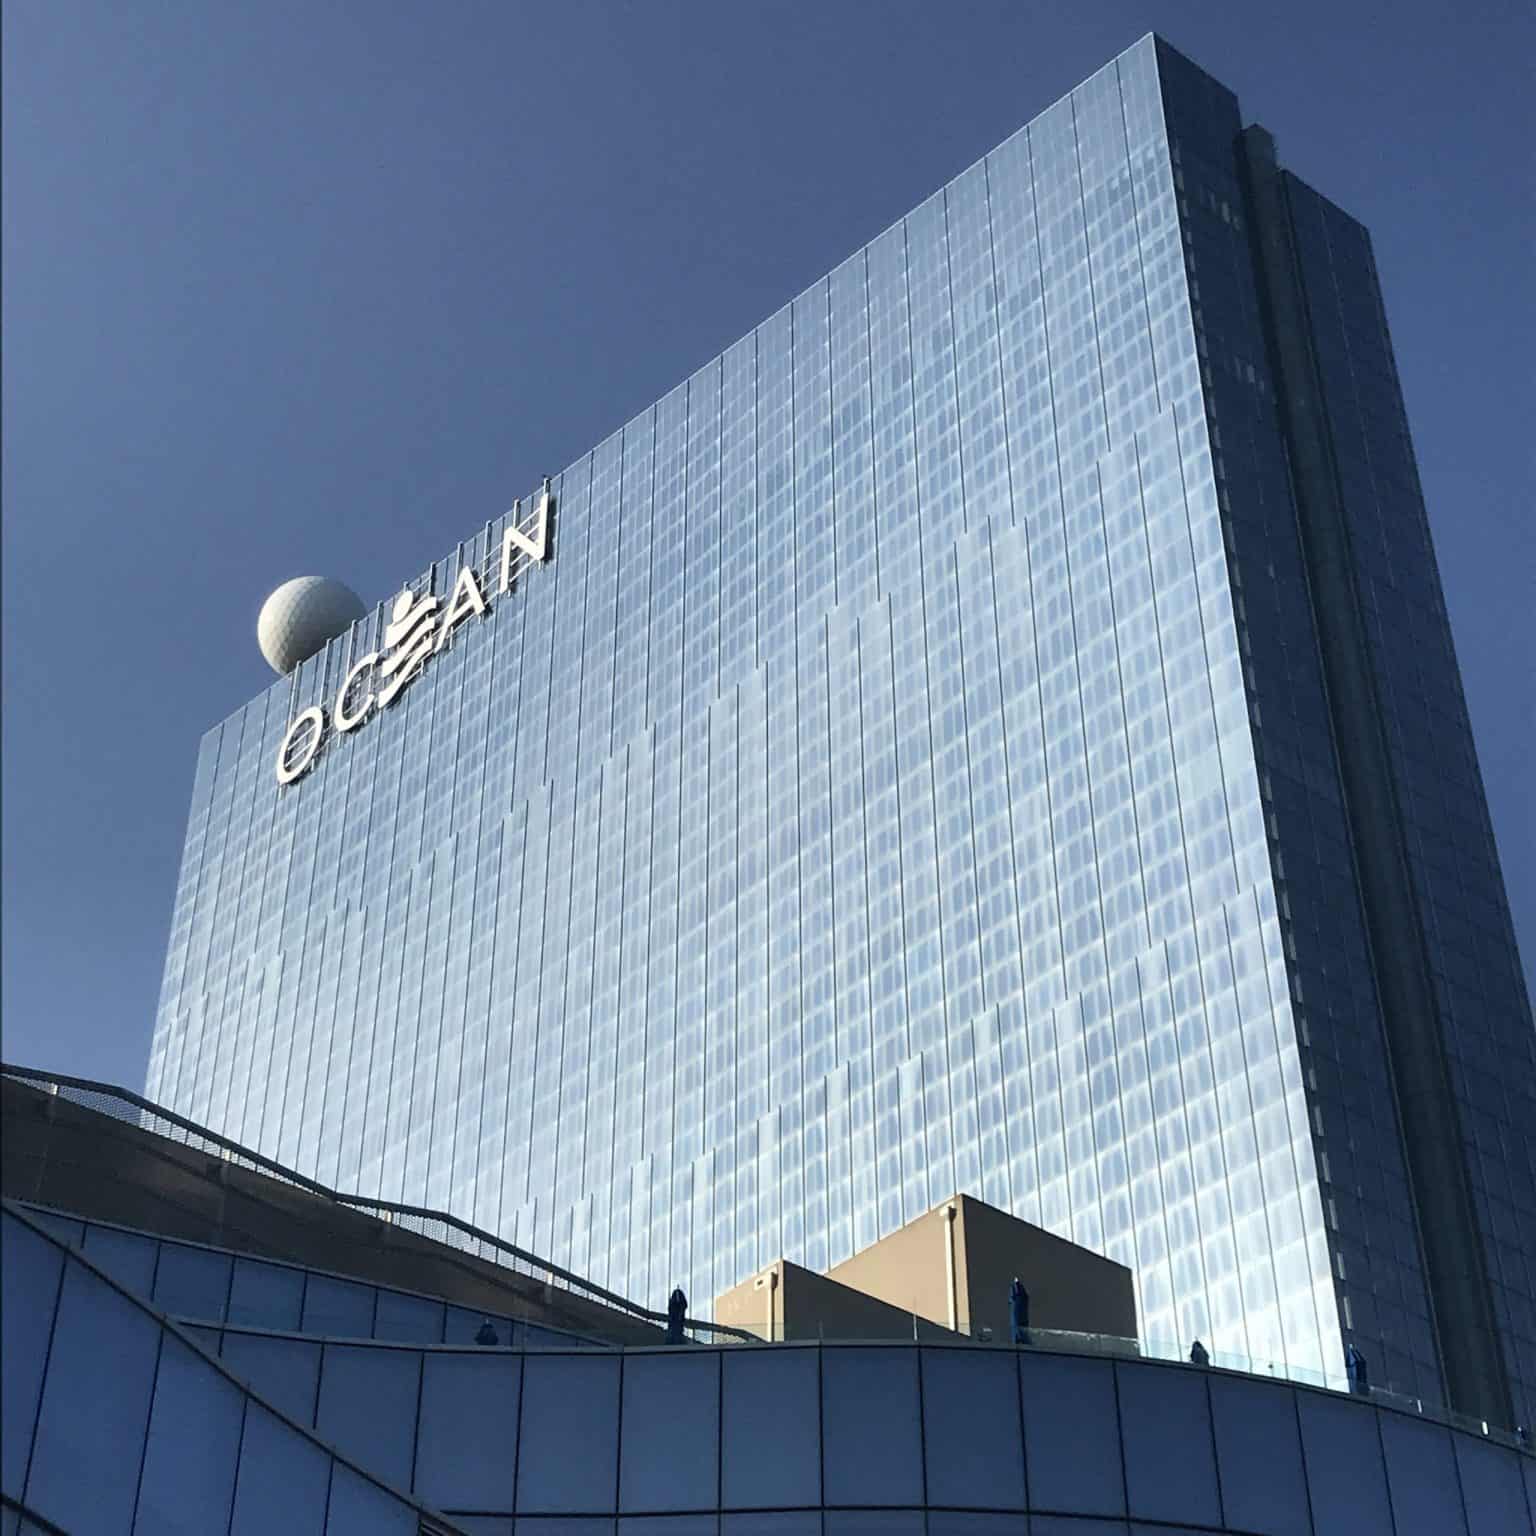 ocean club casino atlantic city comp program